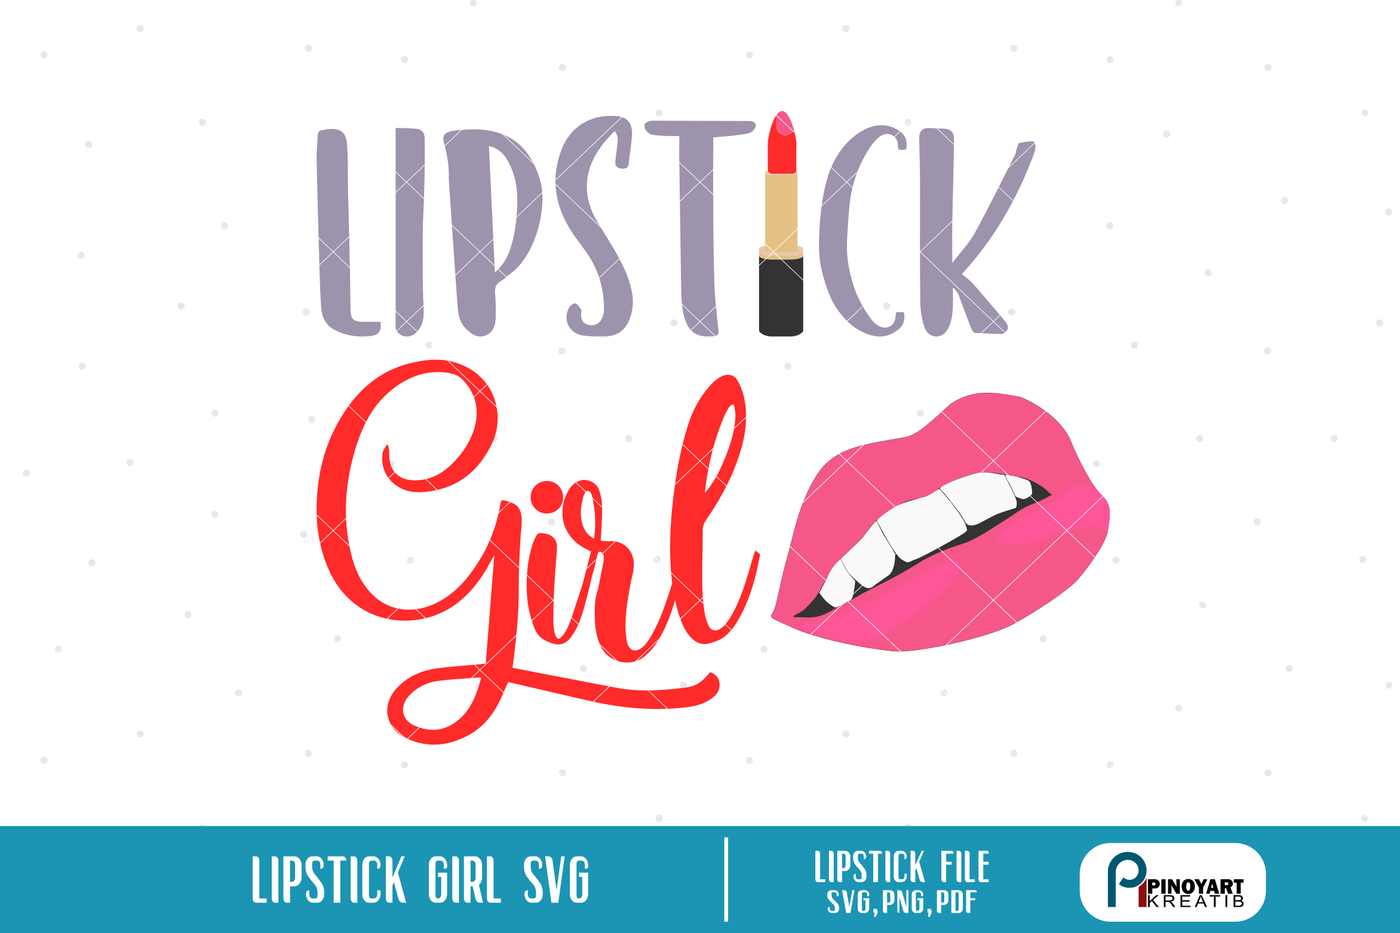 Lipstick Girl Svg Lipstick Girl Dxf Girl Svg Girl Svg File Girl Dxf By Pinoyart Thehungryjpeg Com